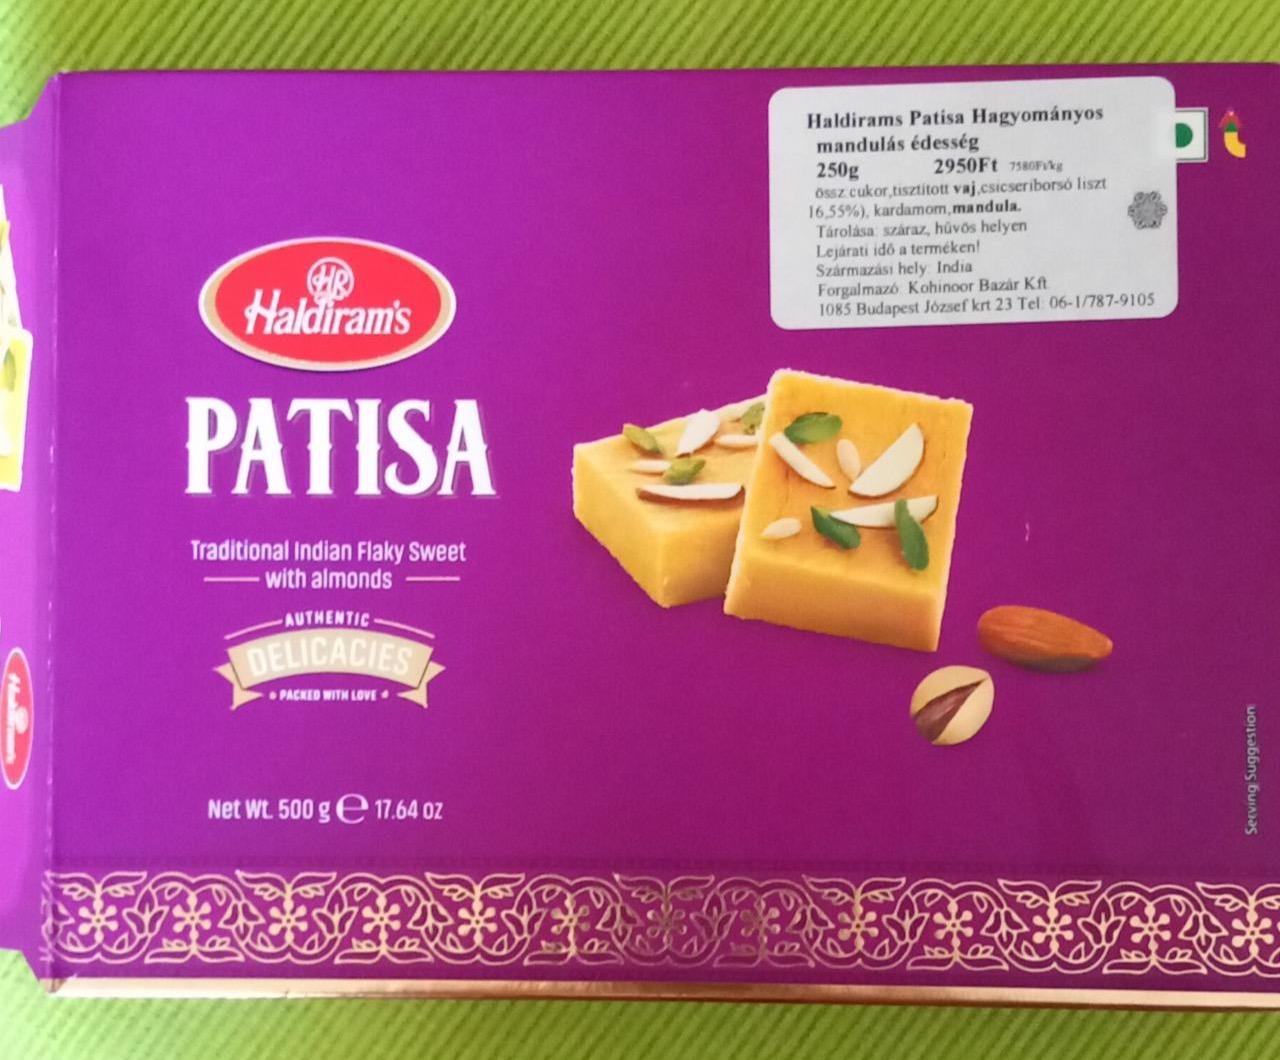 Képek - Patisa mandulás édesség Haldiram's